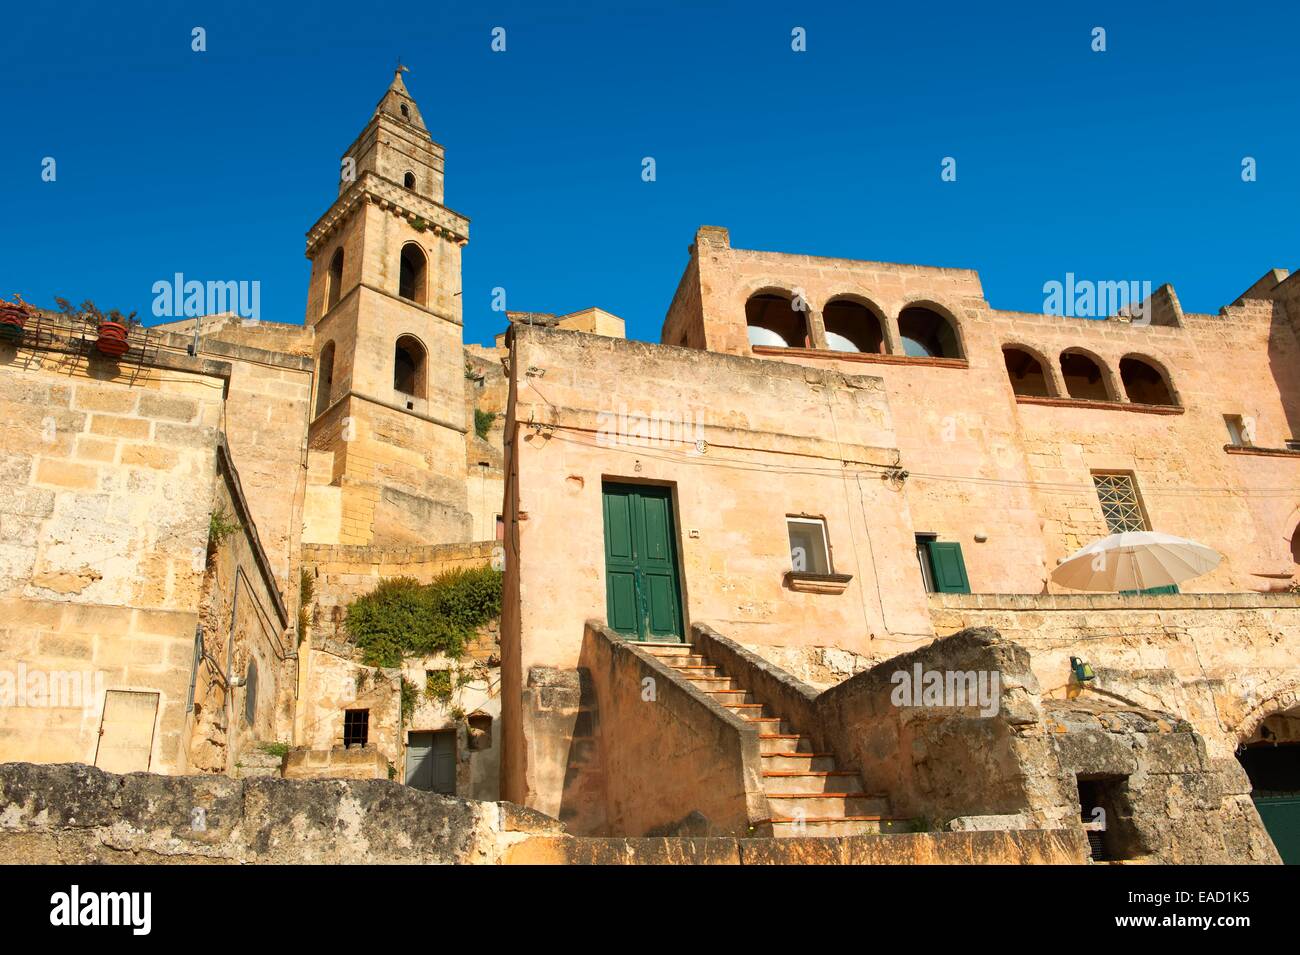 Old buildings in Matera, Matera, Basilicata, Italy Stock Photo